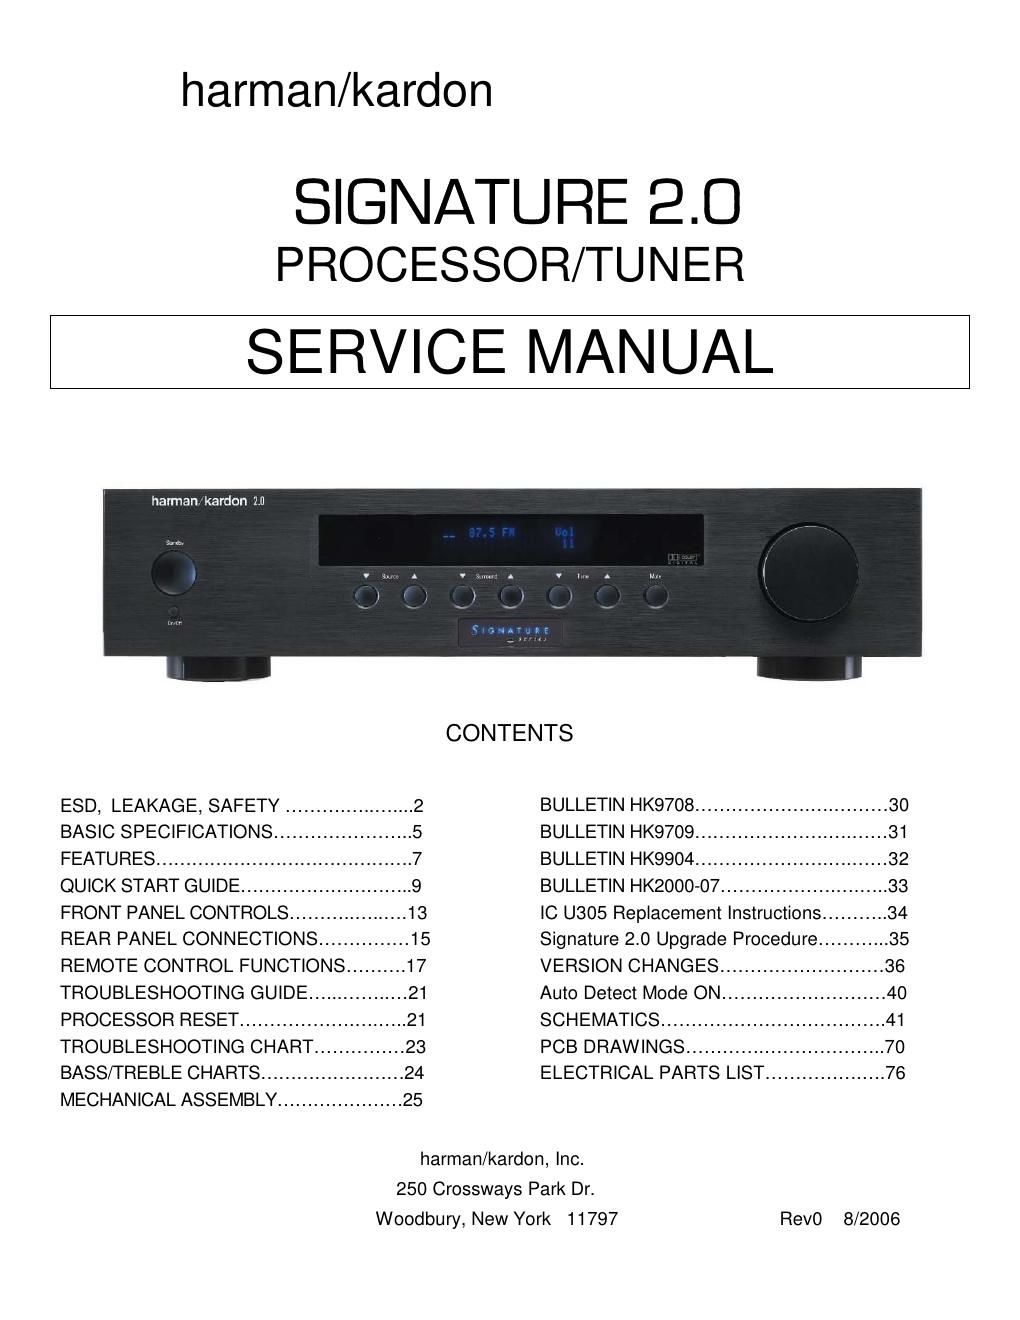 harman kardon signature 2 0 service manual